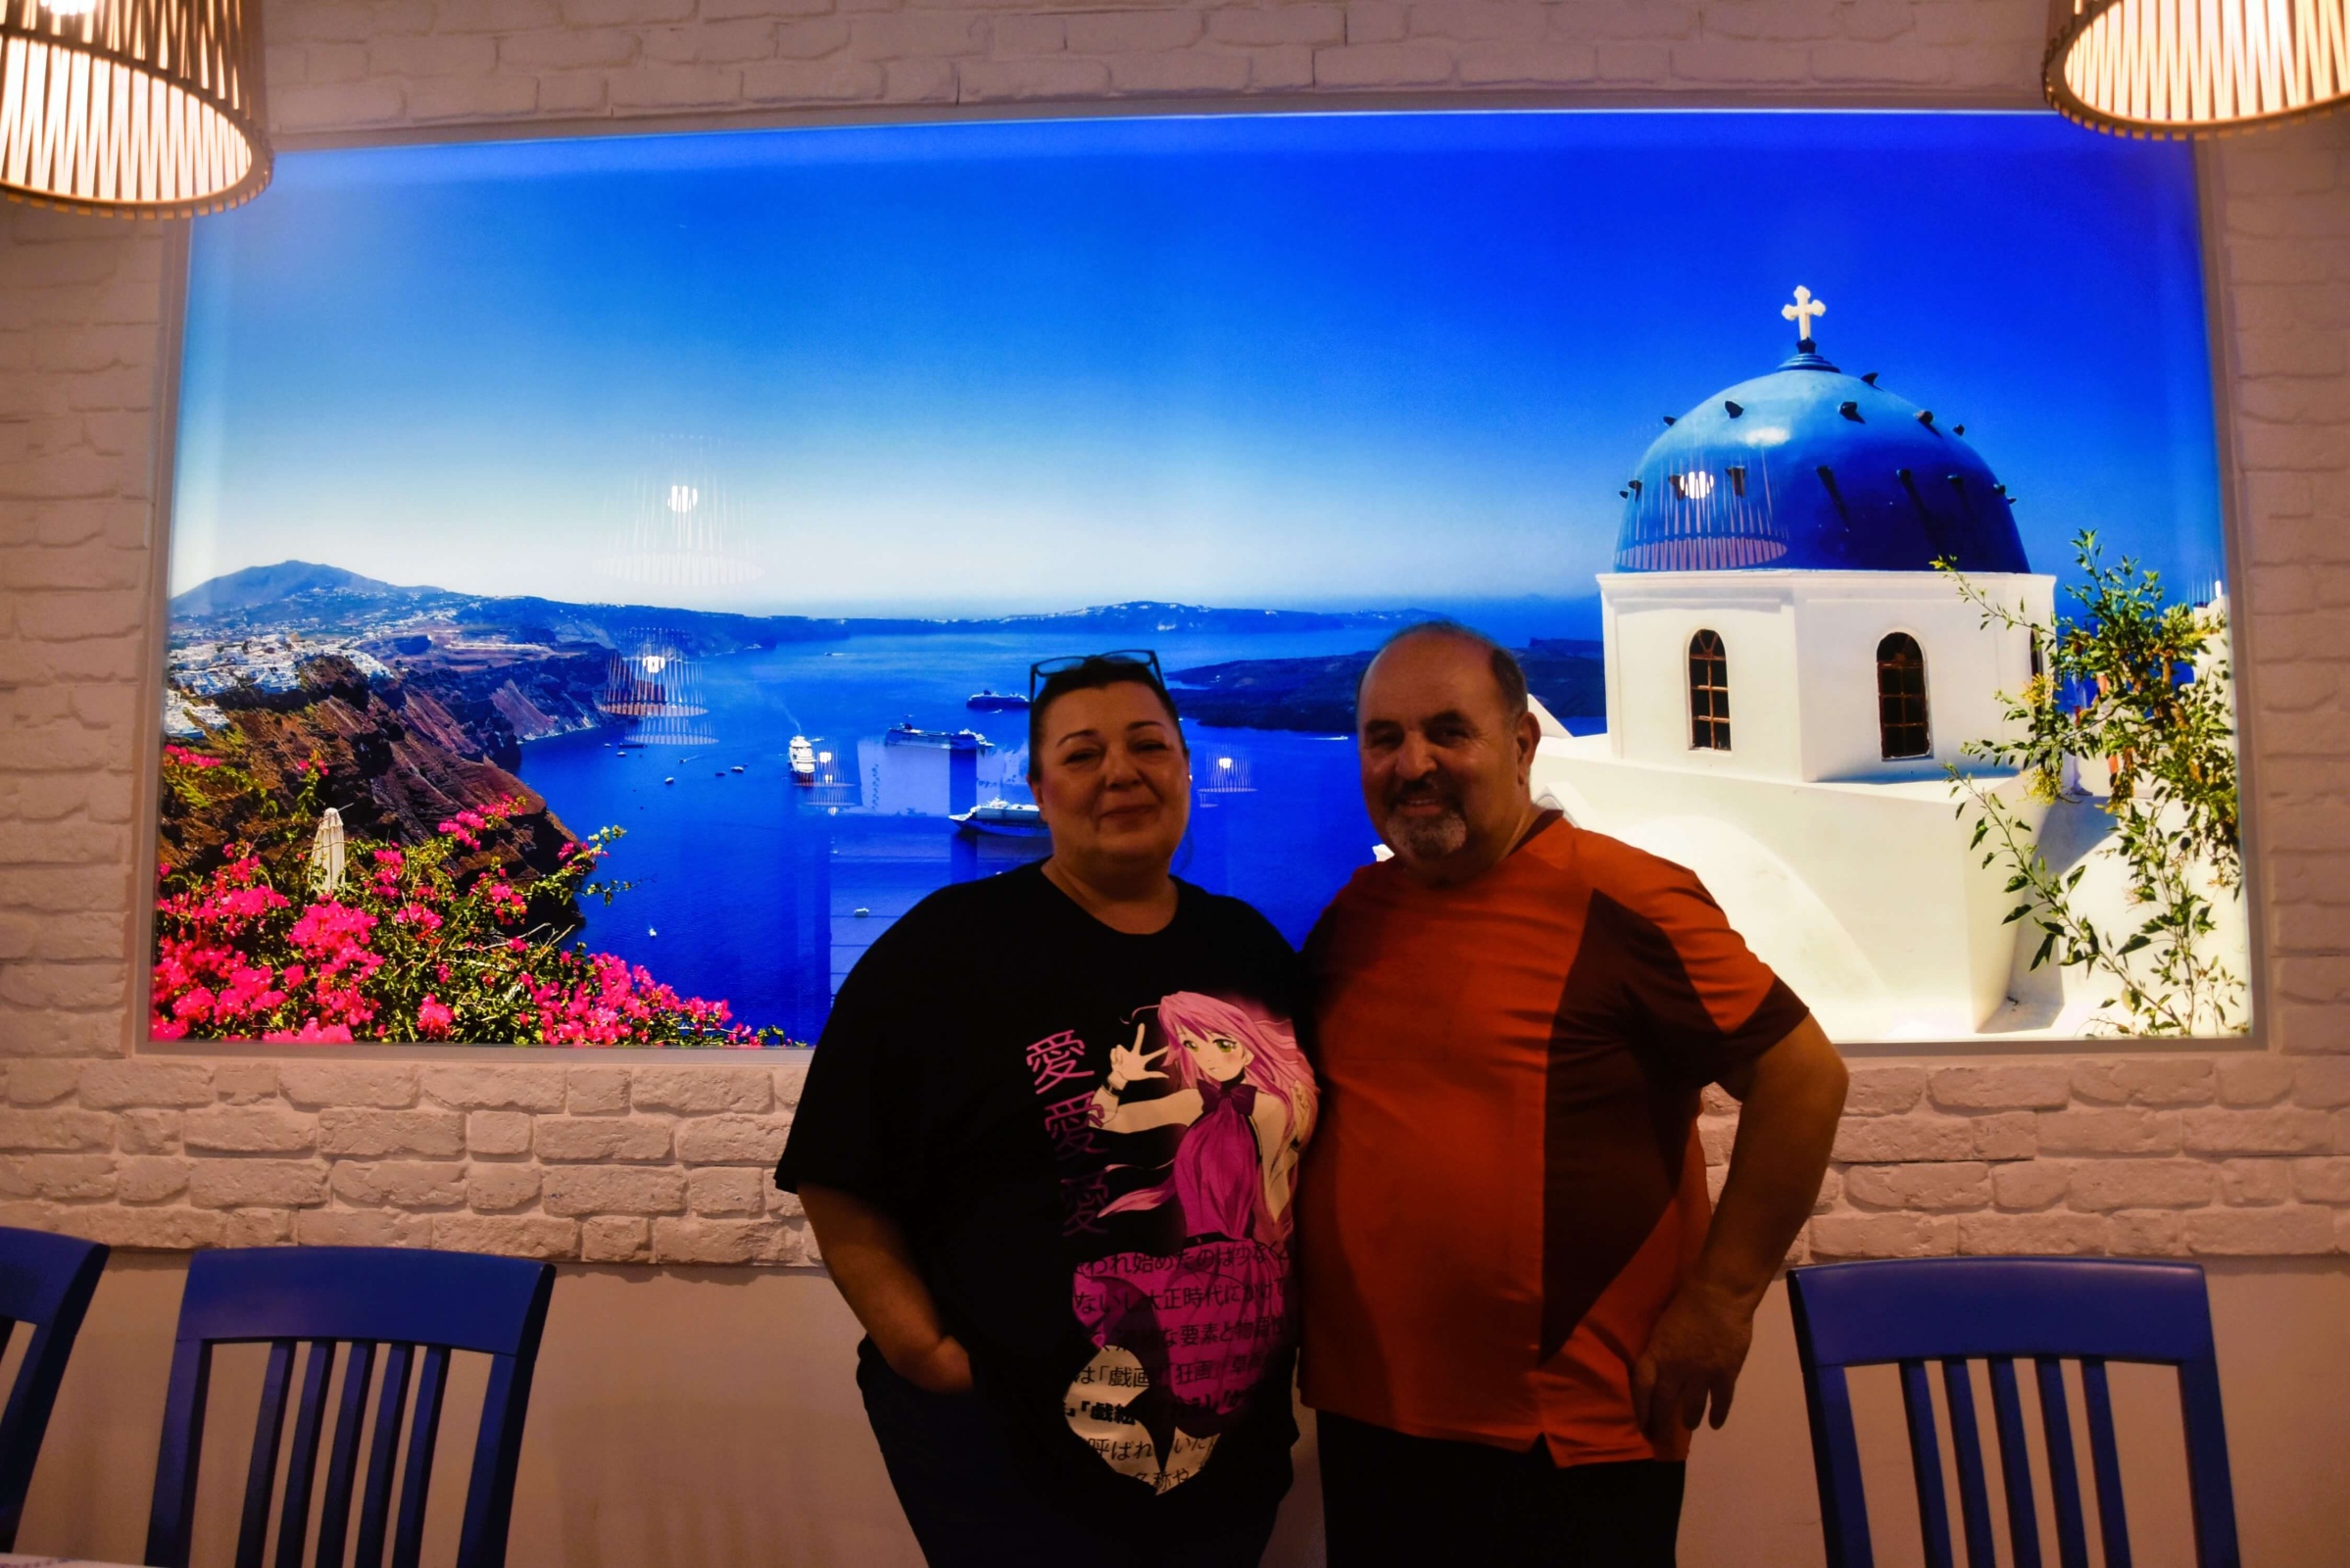 Barbara Boczar i Savvas Patsidis, właściciele restauracji Santorini w Rybniku. Zdj. Aleksander Król